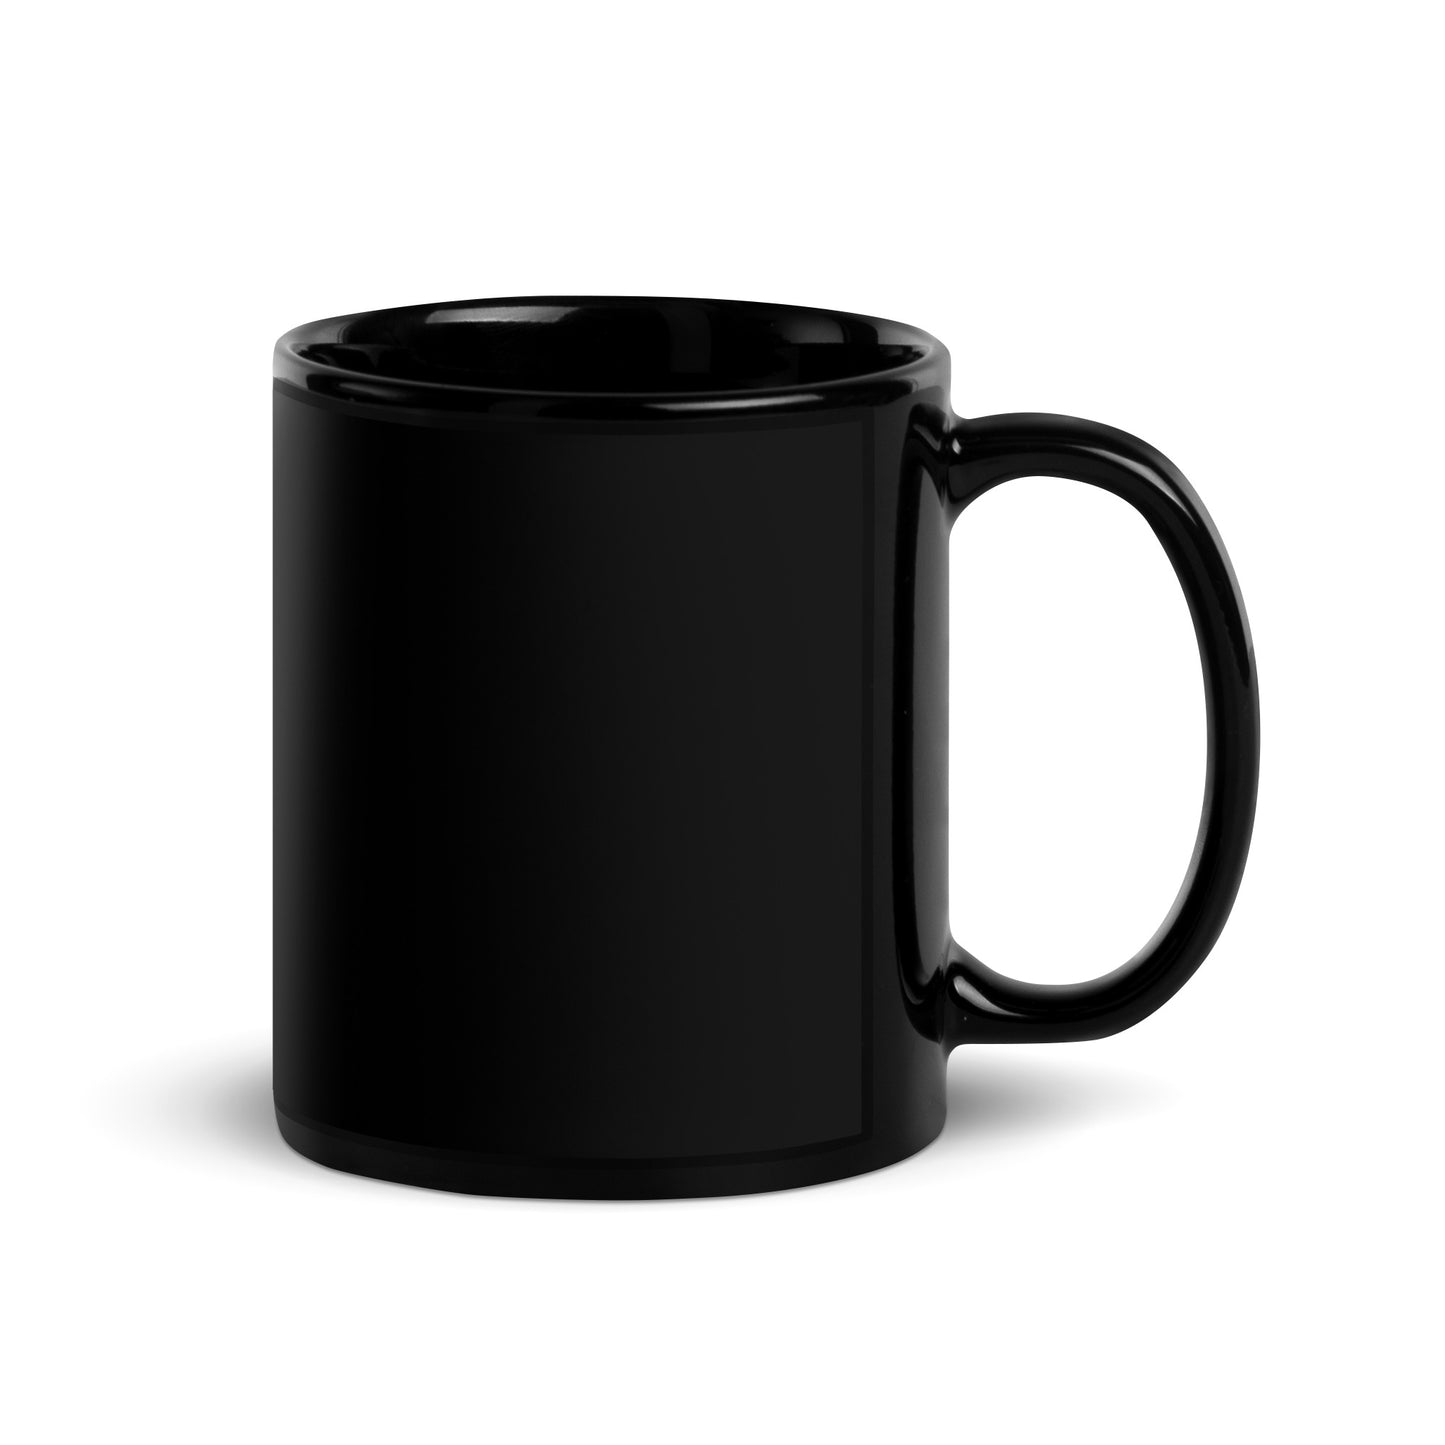 Work Harder-Black Glossy Mug